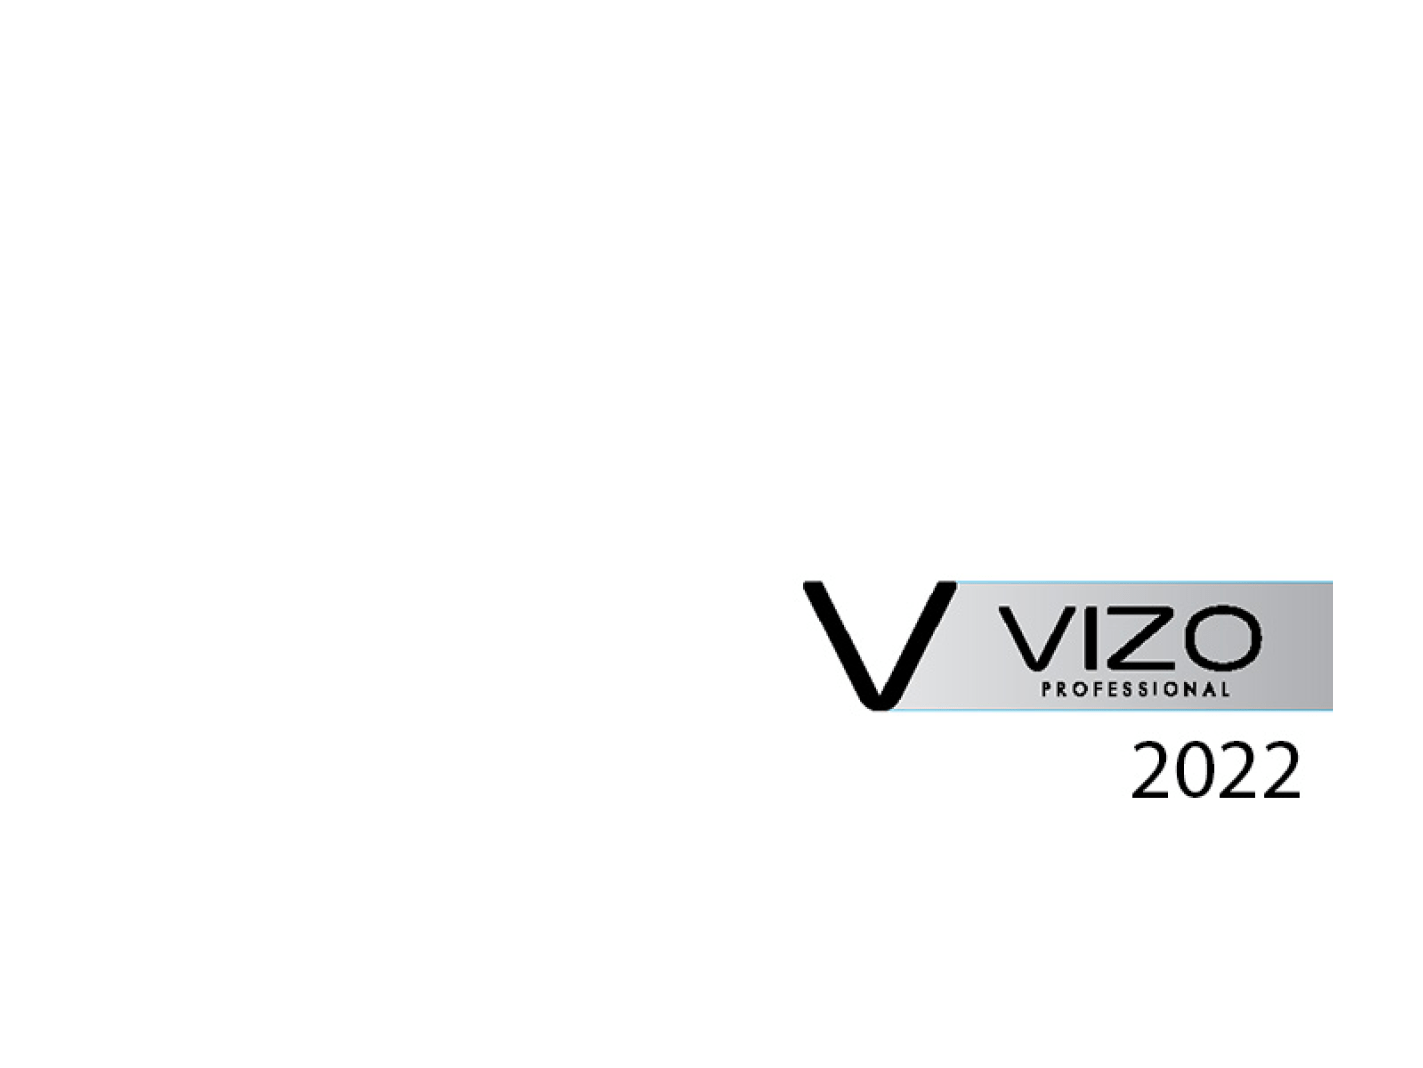 VIZO General Catalog Aug 2022 LR